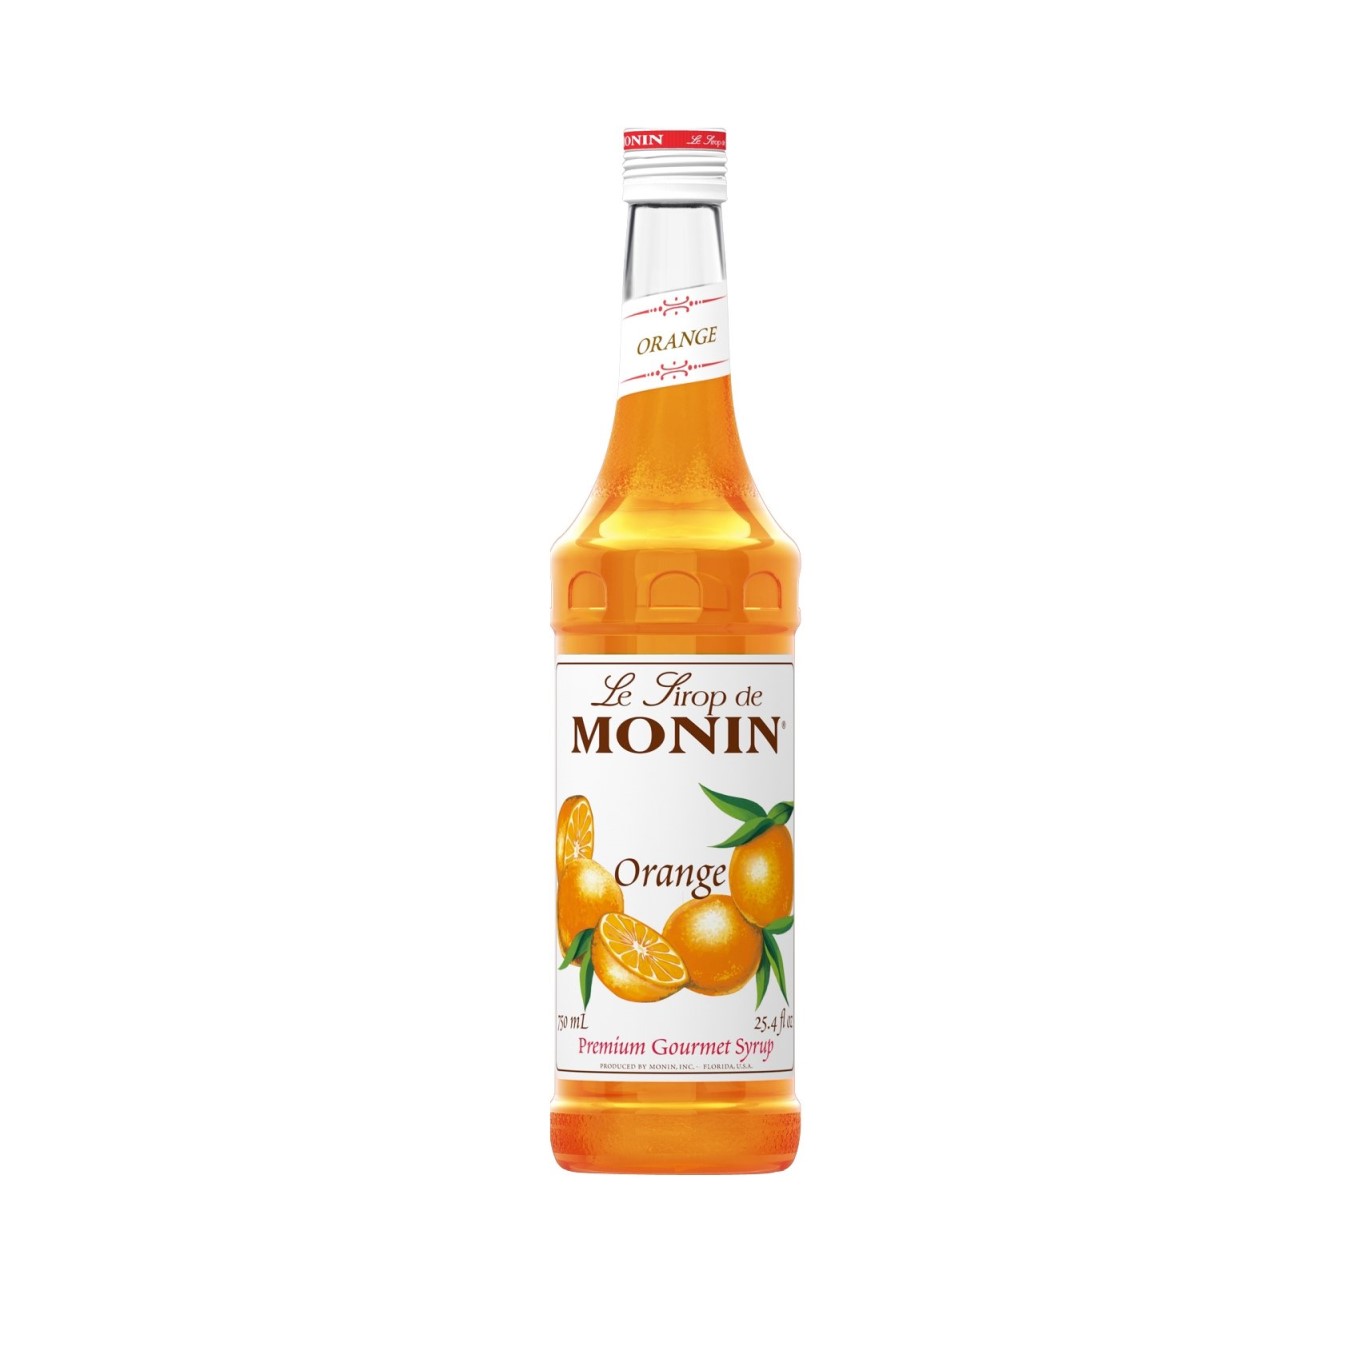 Monin Orange Syrup - Monin Cam